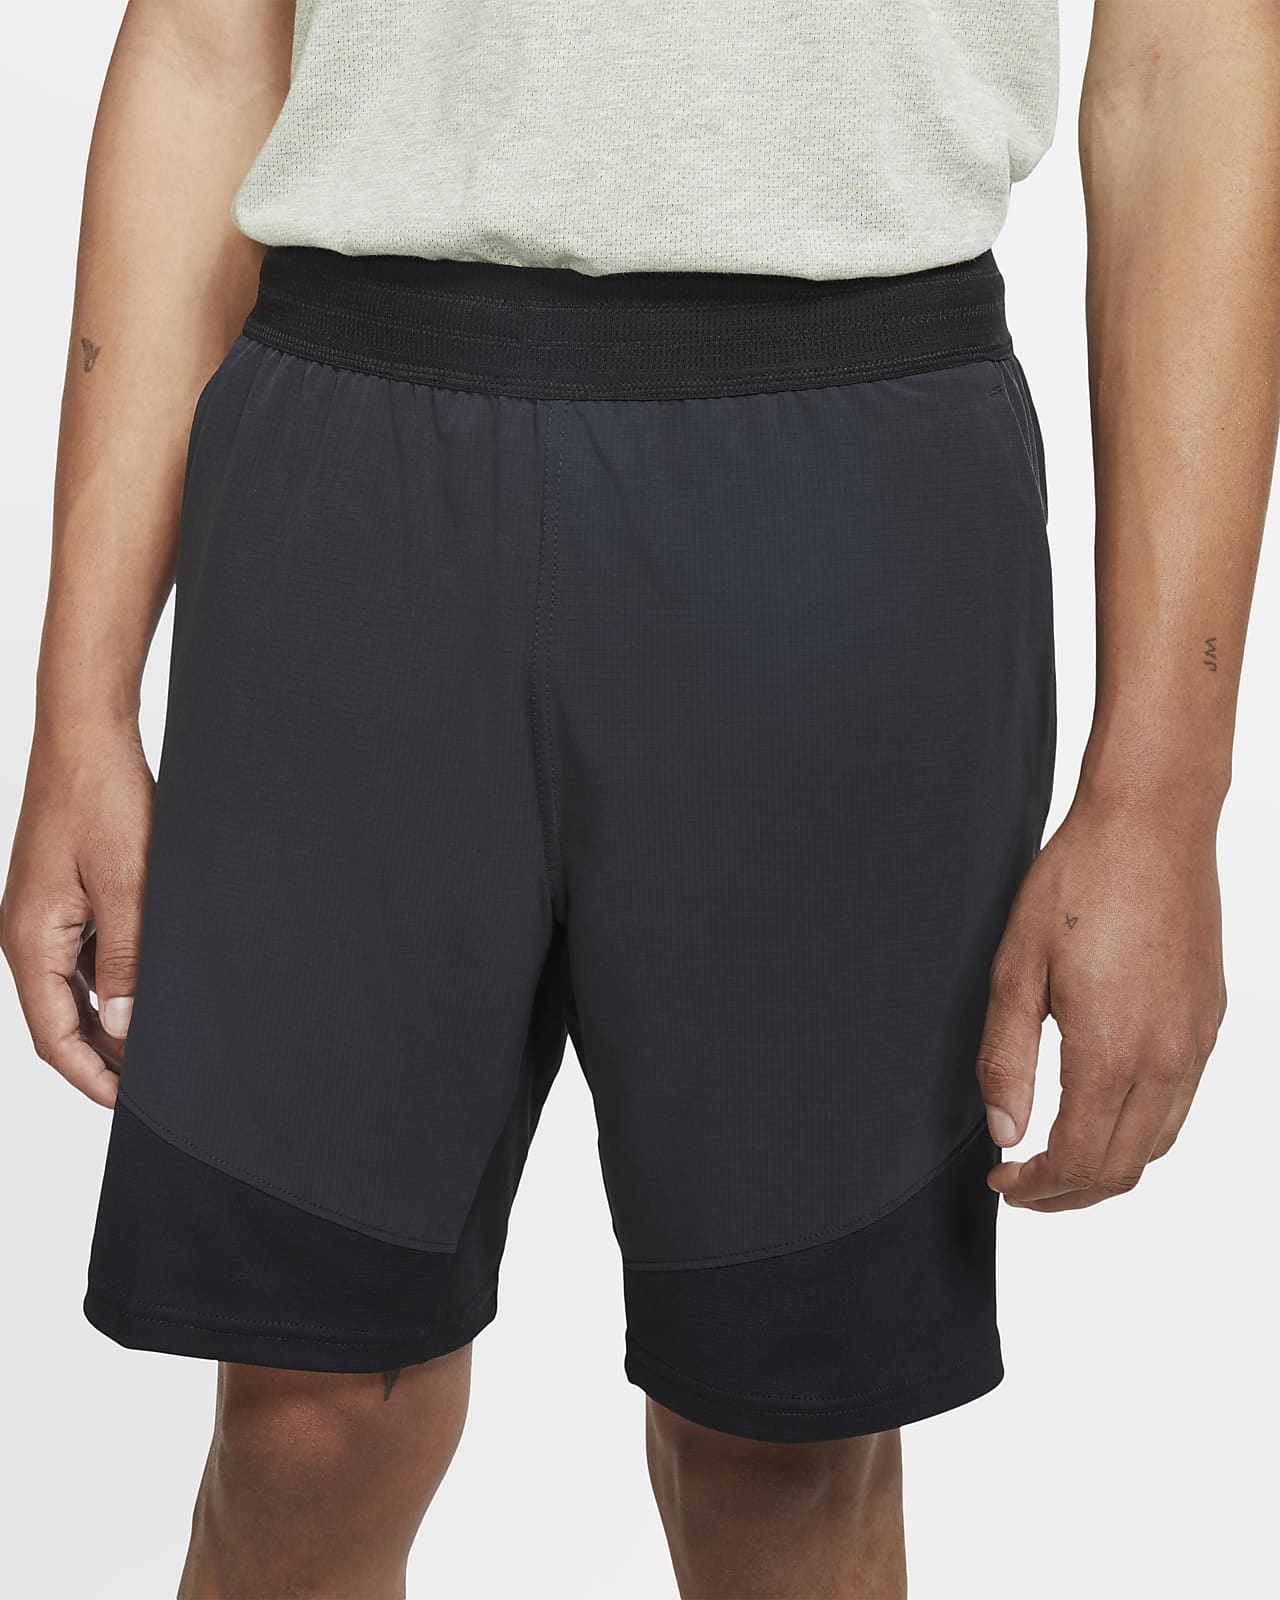 Nike Flex Men's Woven Training Shorts 